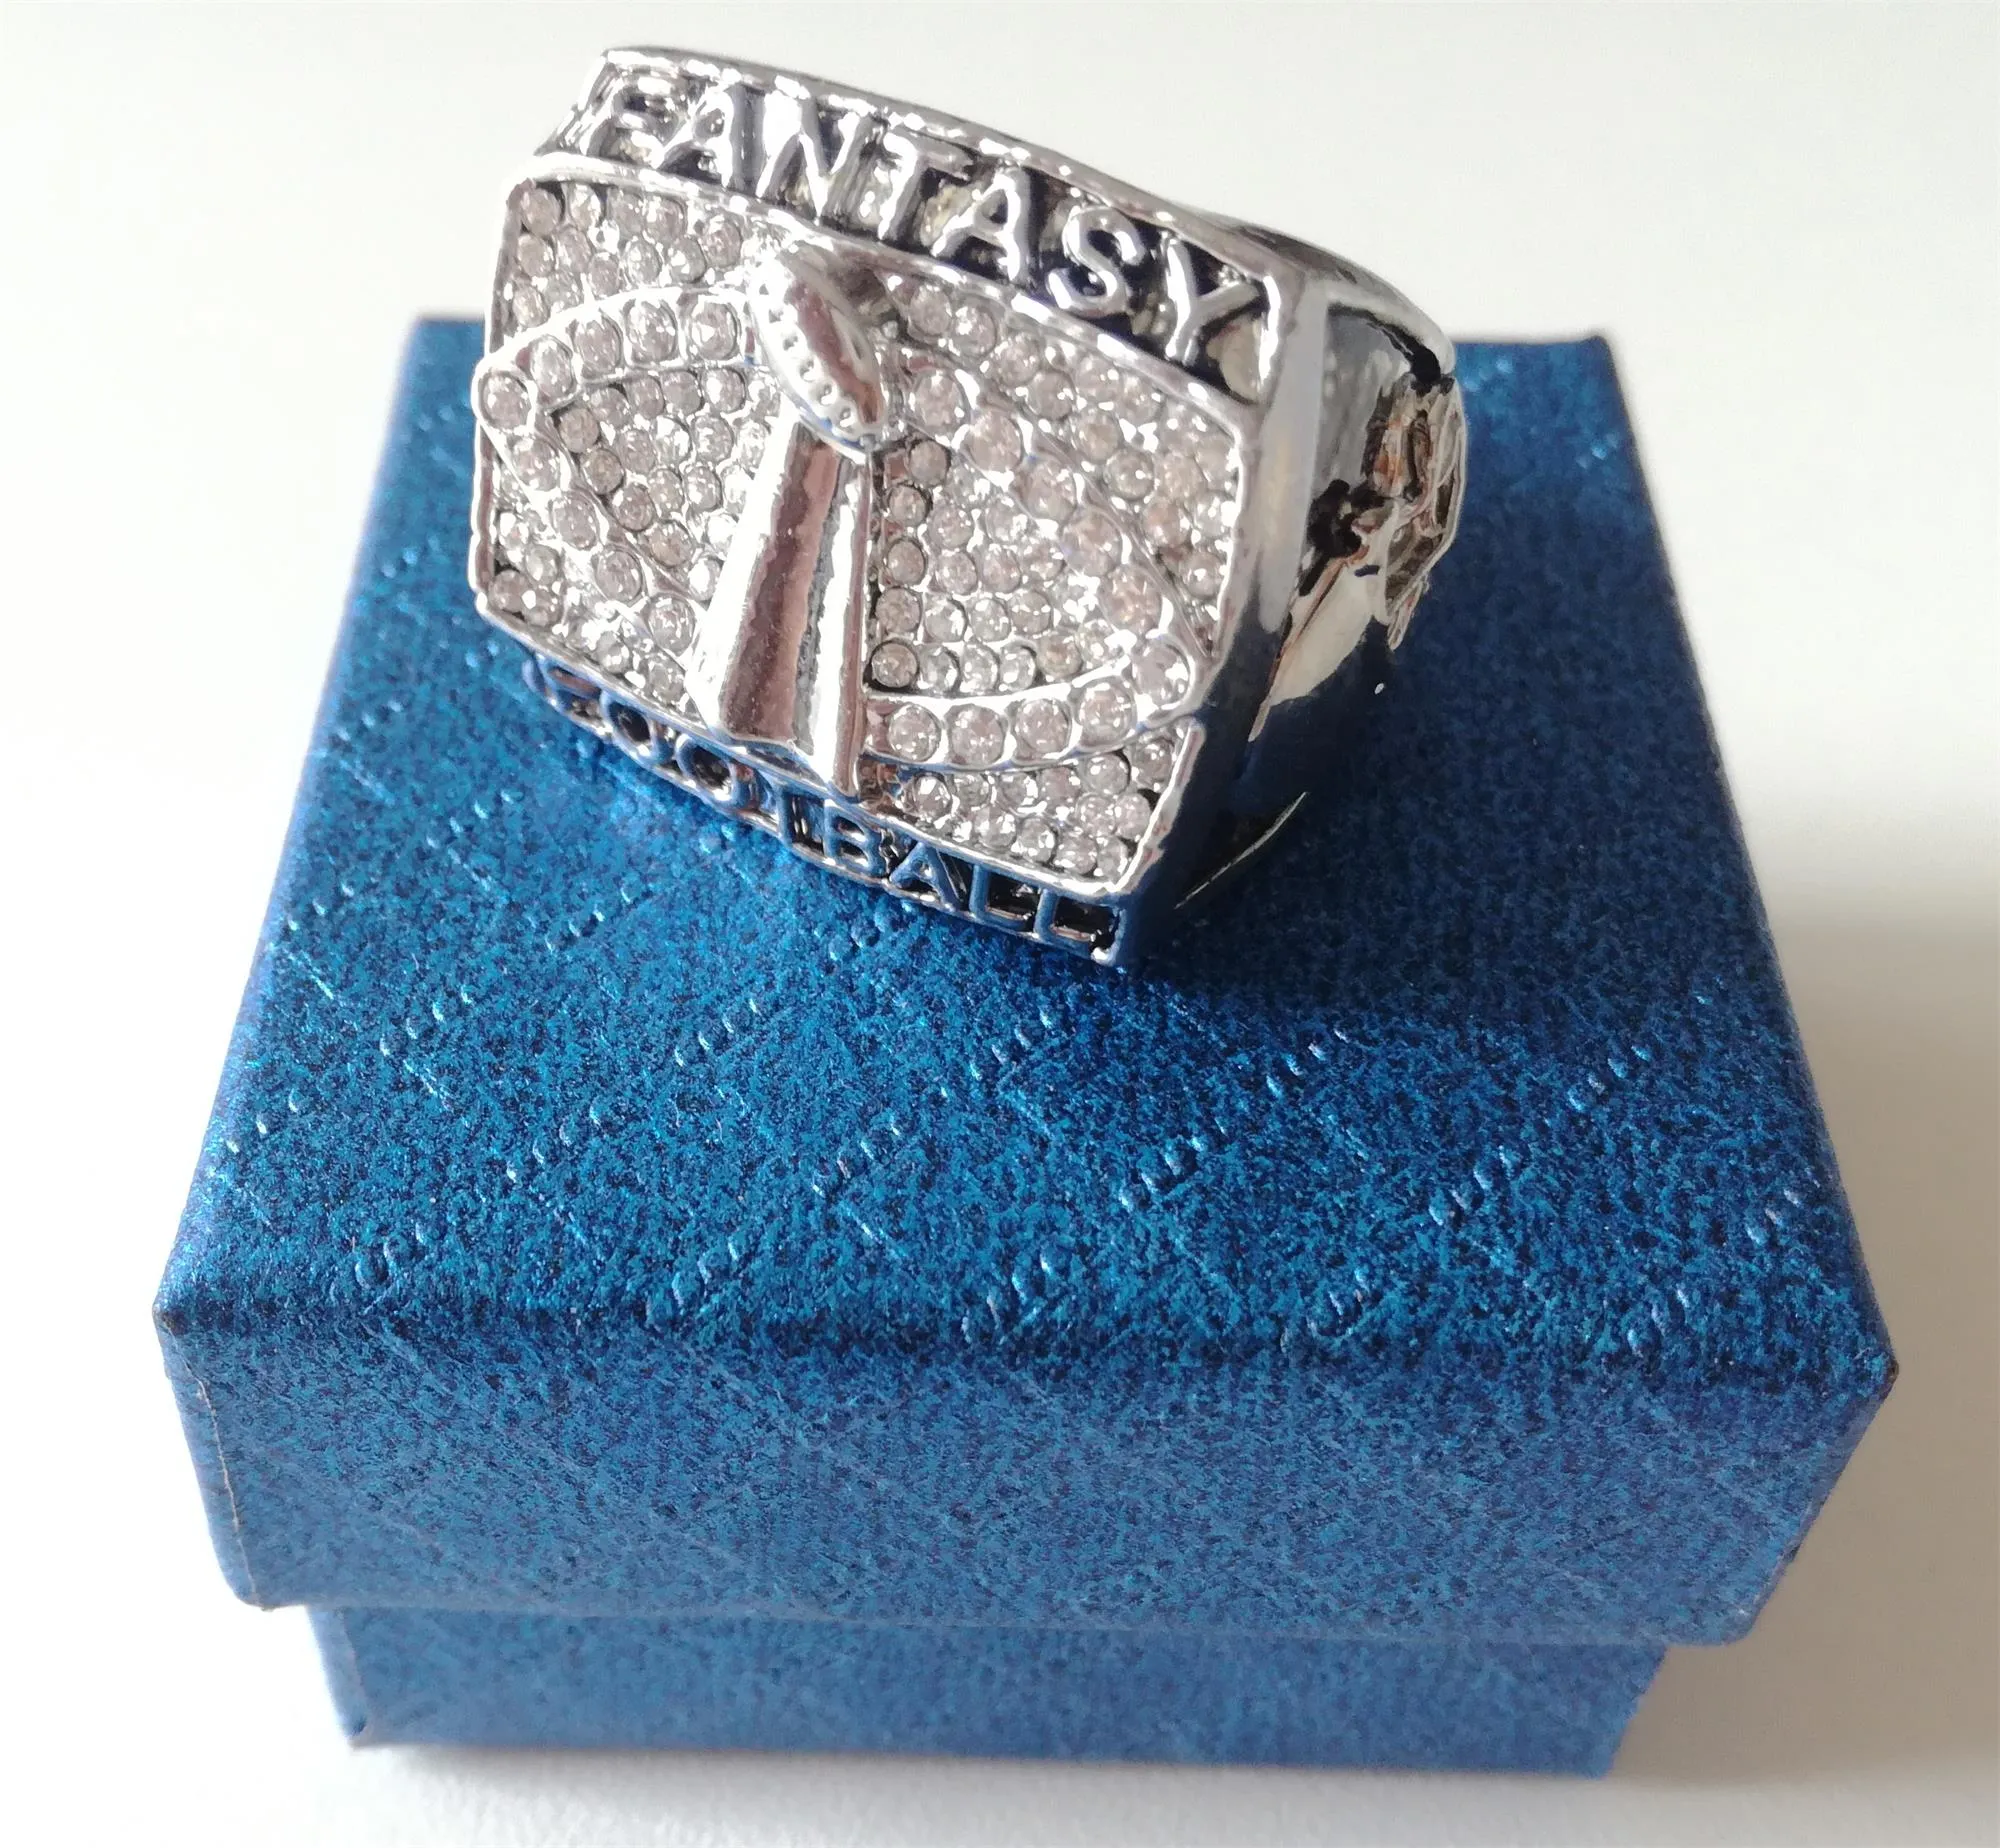 great quatity 2014 Fantasy Football League Championship ring fans men women gift ring size 11323Z